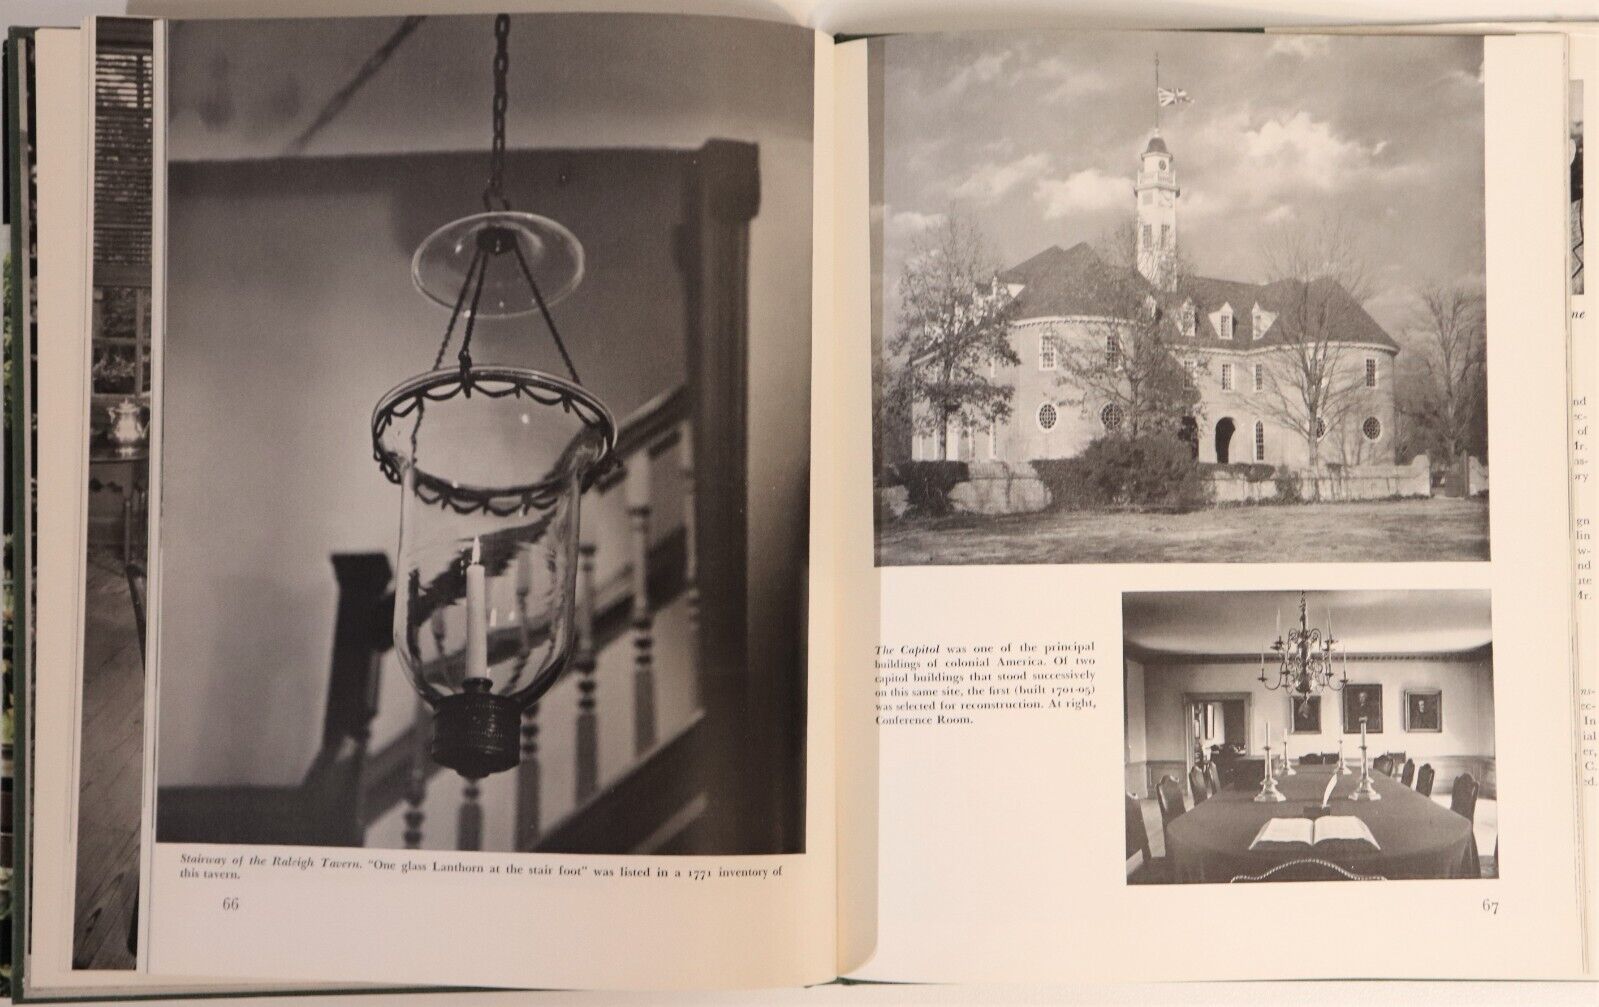 Colonial Williamsburg - 1966 - Vintage American Architecture Book